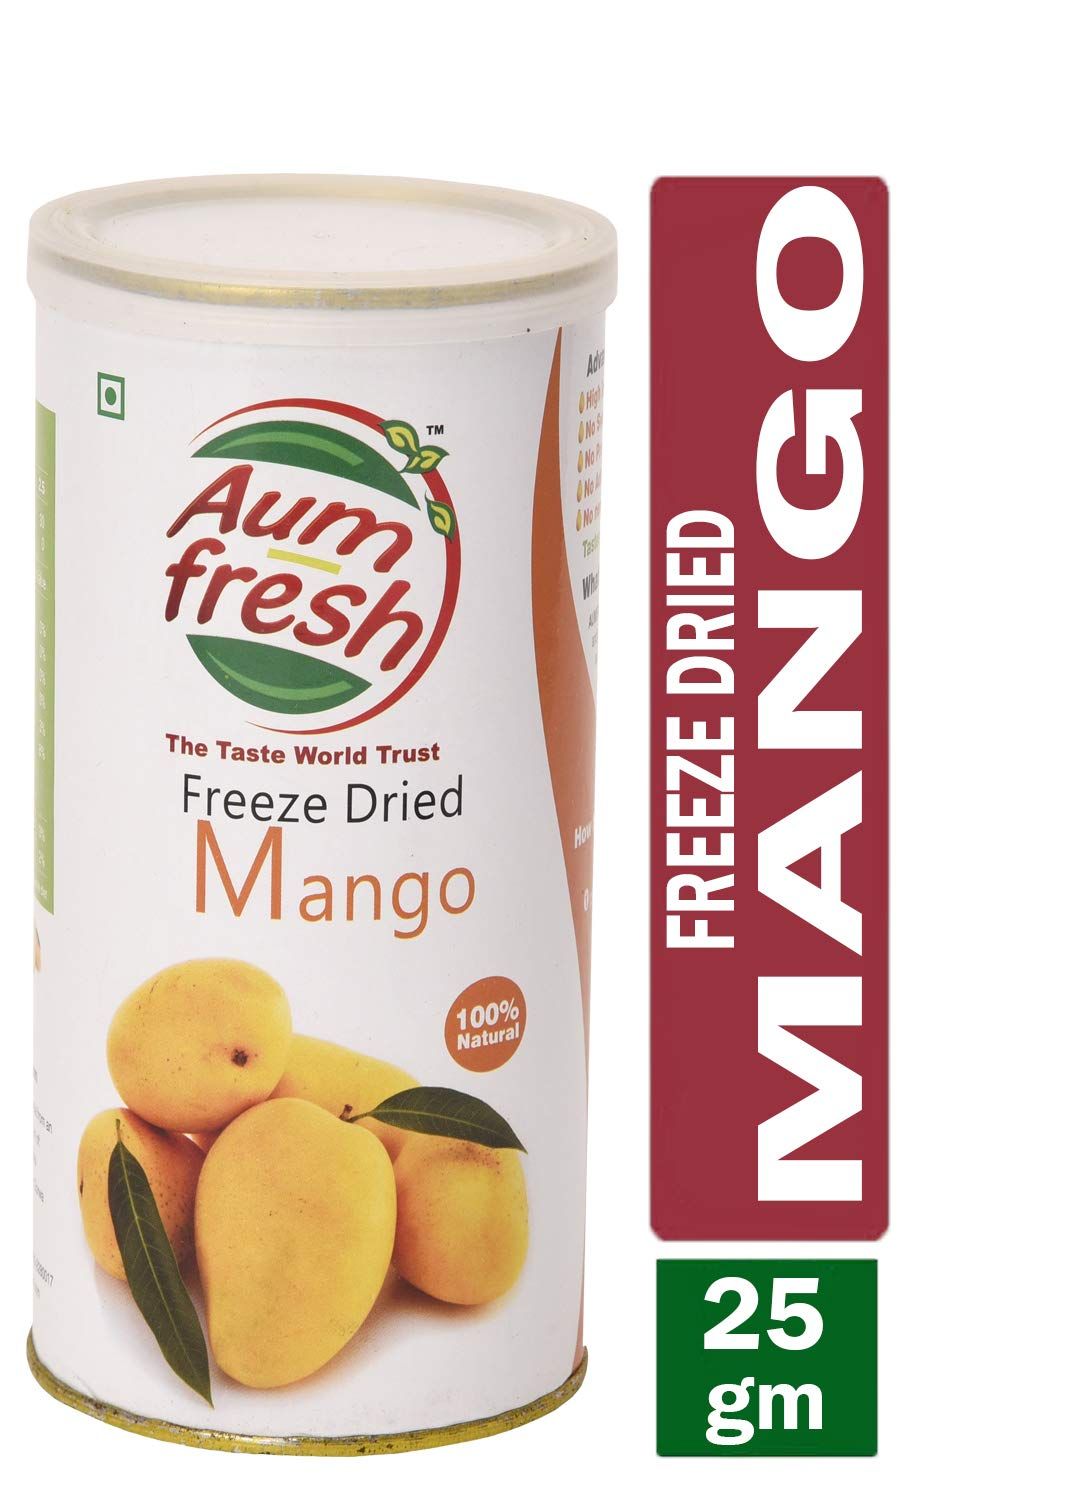 Aum Fresh Freeze Dried Mango Image